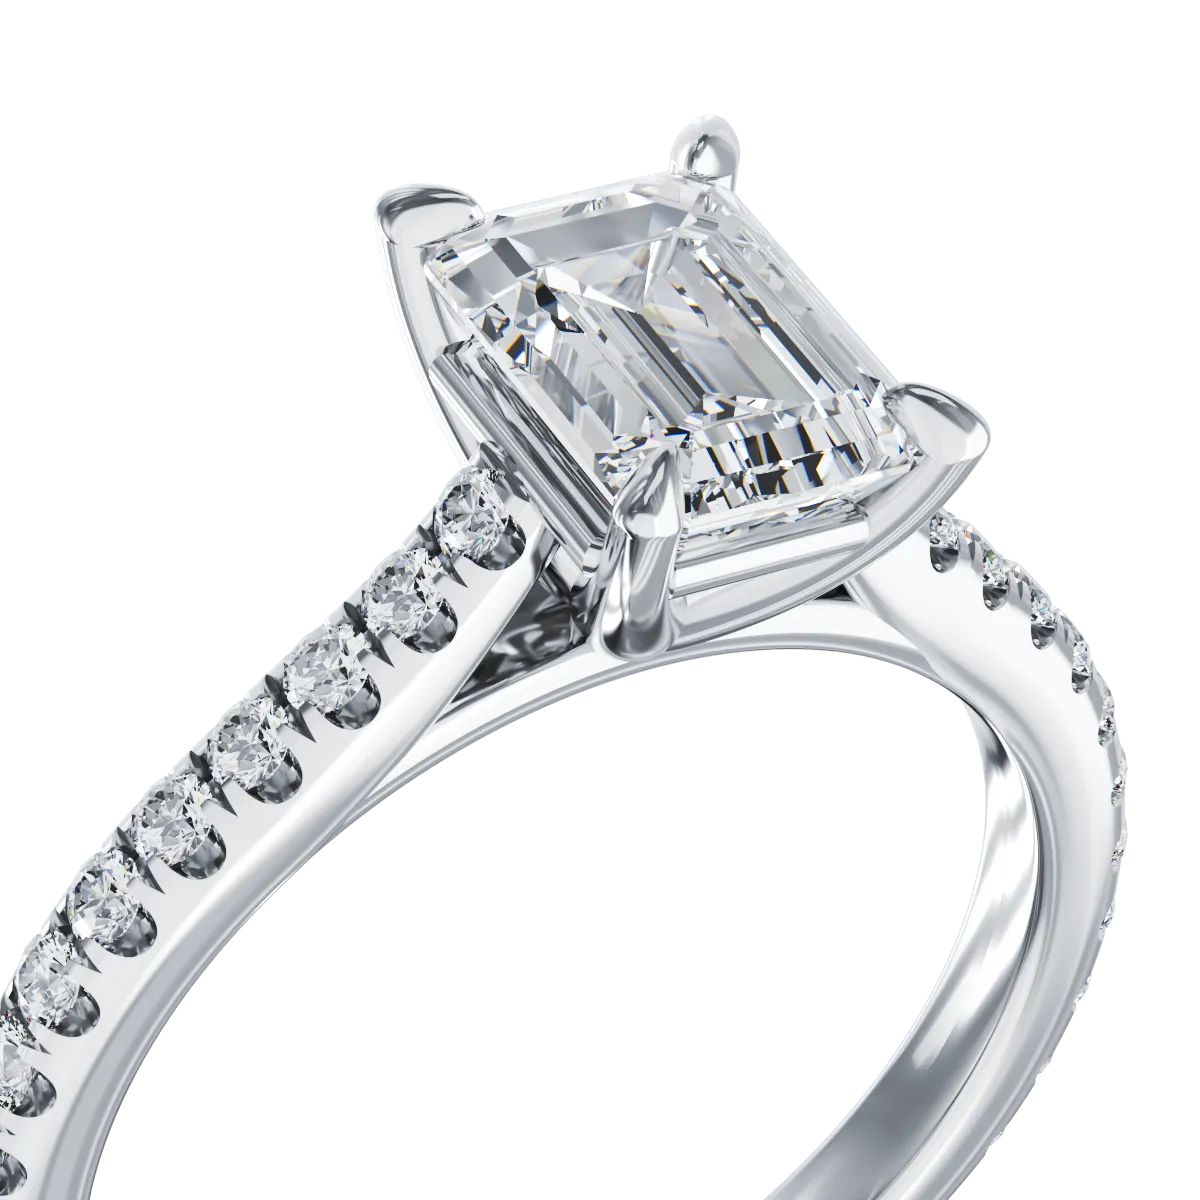 Diamond platinum engagement ring with 1.2ct diamond and 0.28ct diamonds